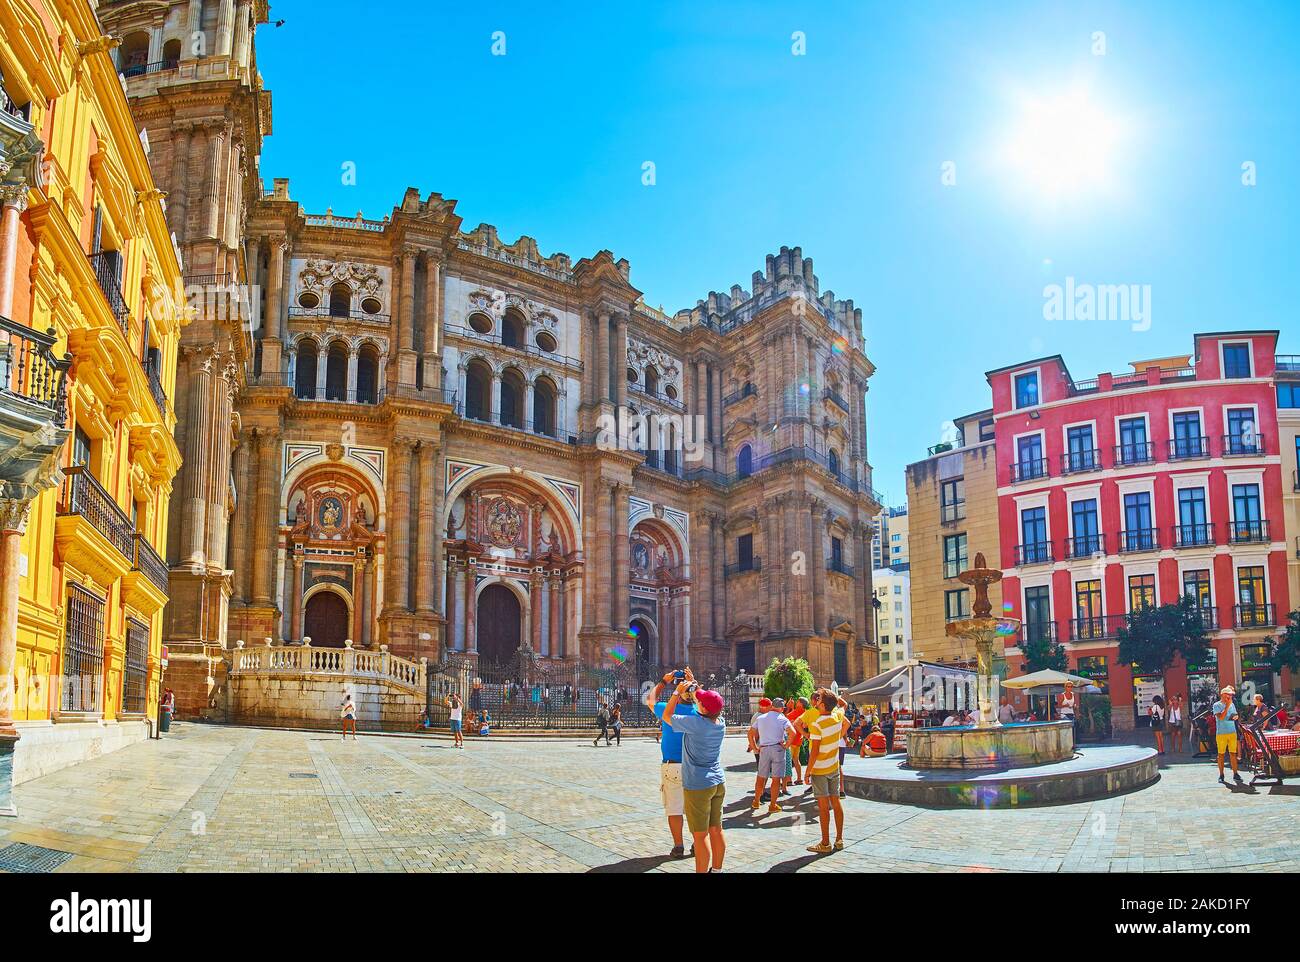 MALAGA, SPAIN - SEPTEMBER 26, 2019: Historical Plaza Obispo square with its main landmarks - Bishop's Palace (Palacio Episcopal) and Malaga Cathedral, Stock Photo